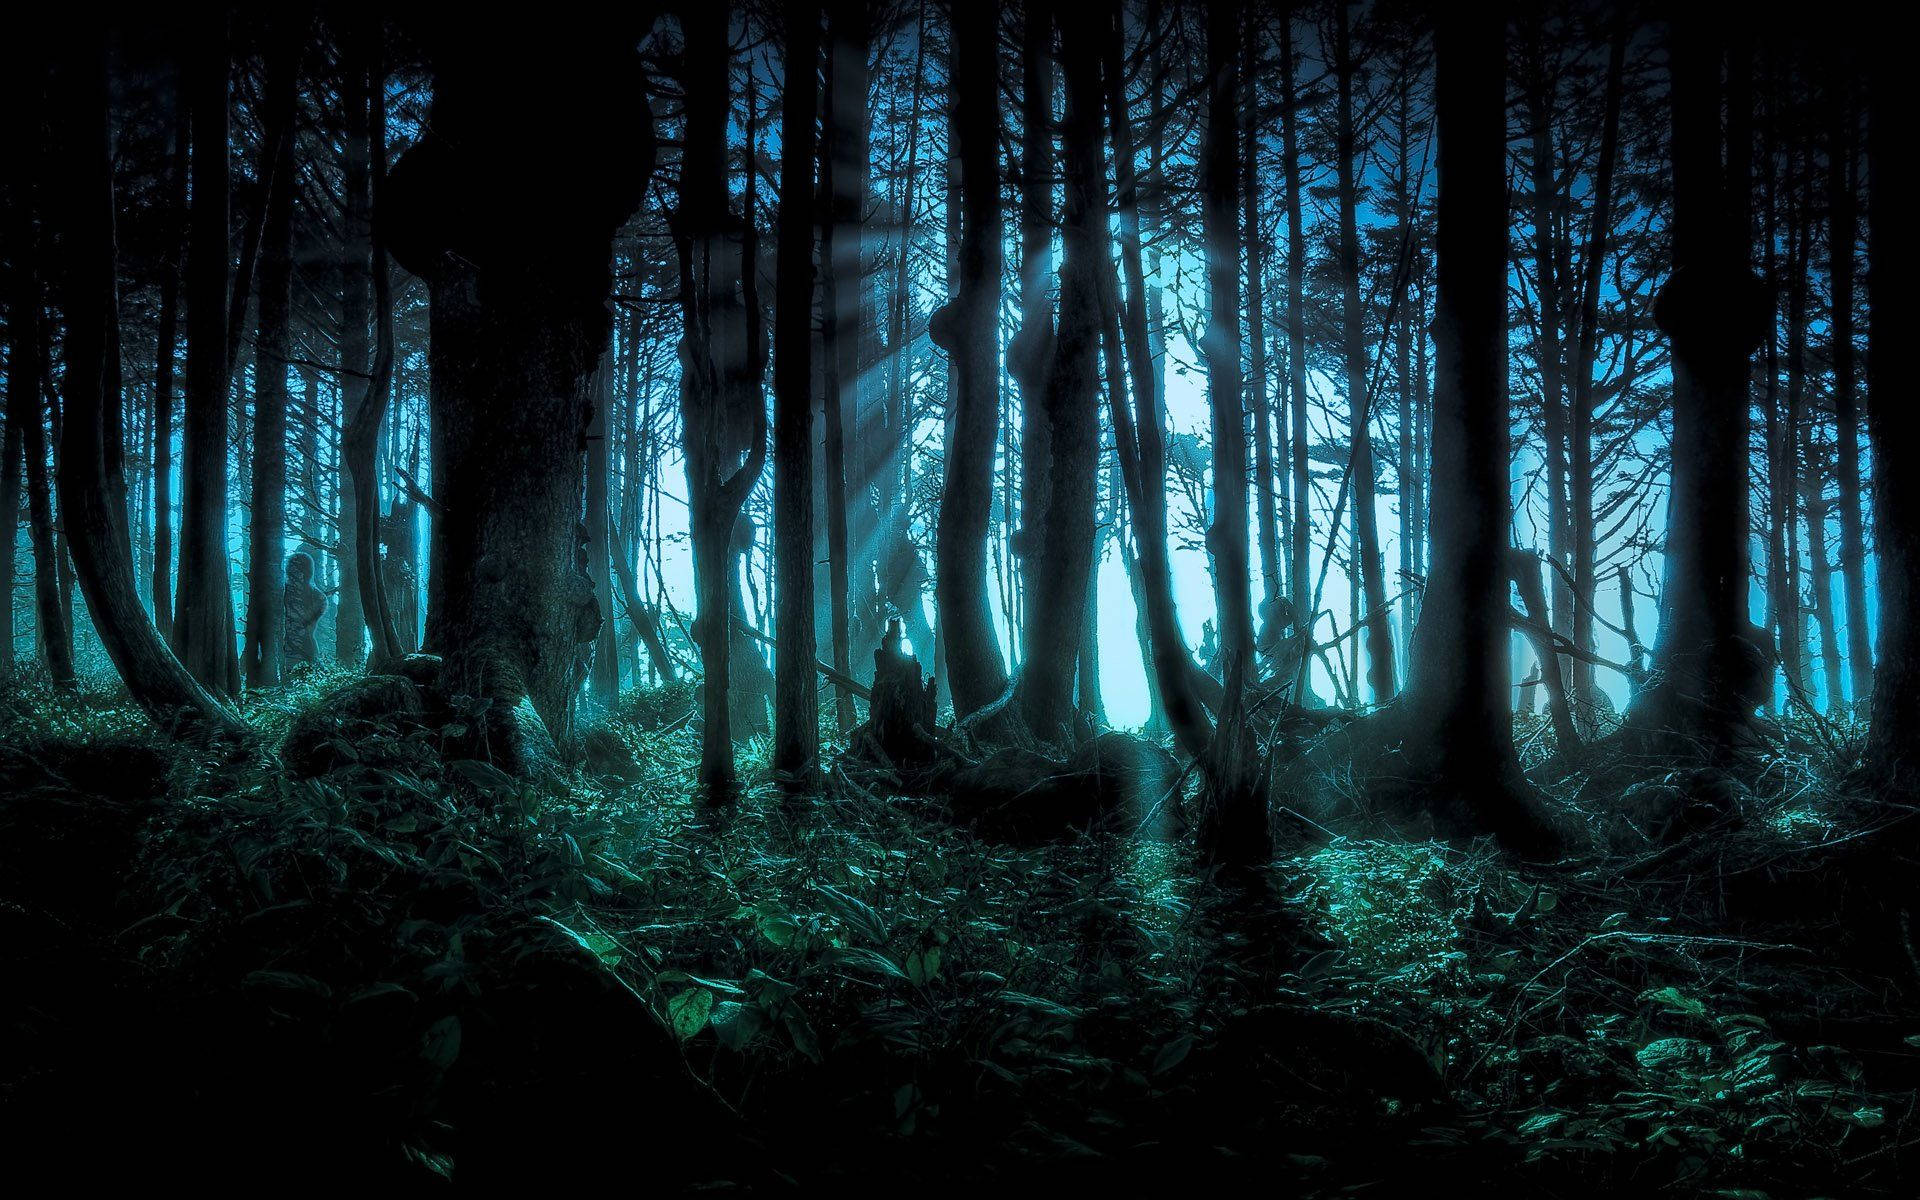 Spooky Dark Forest